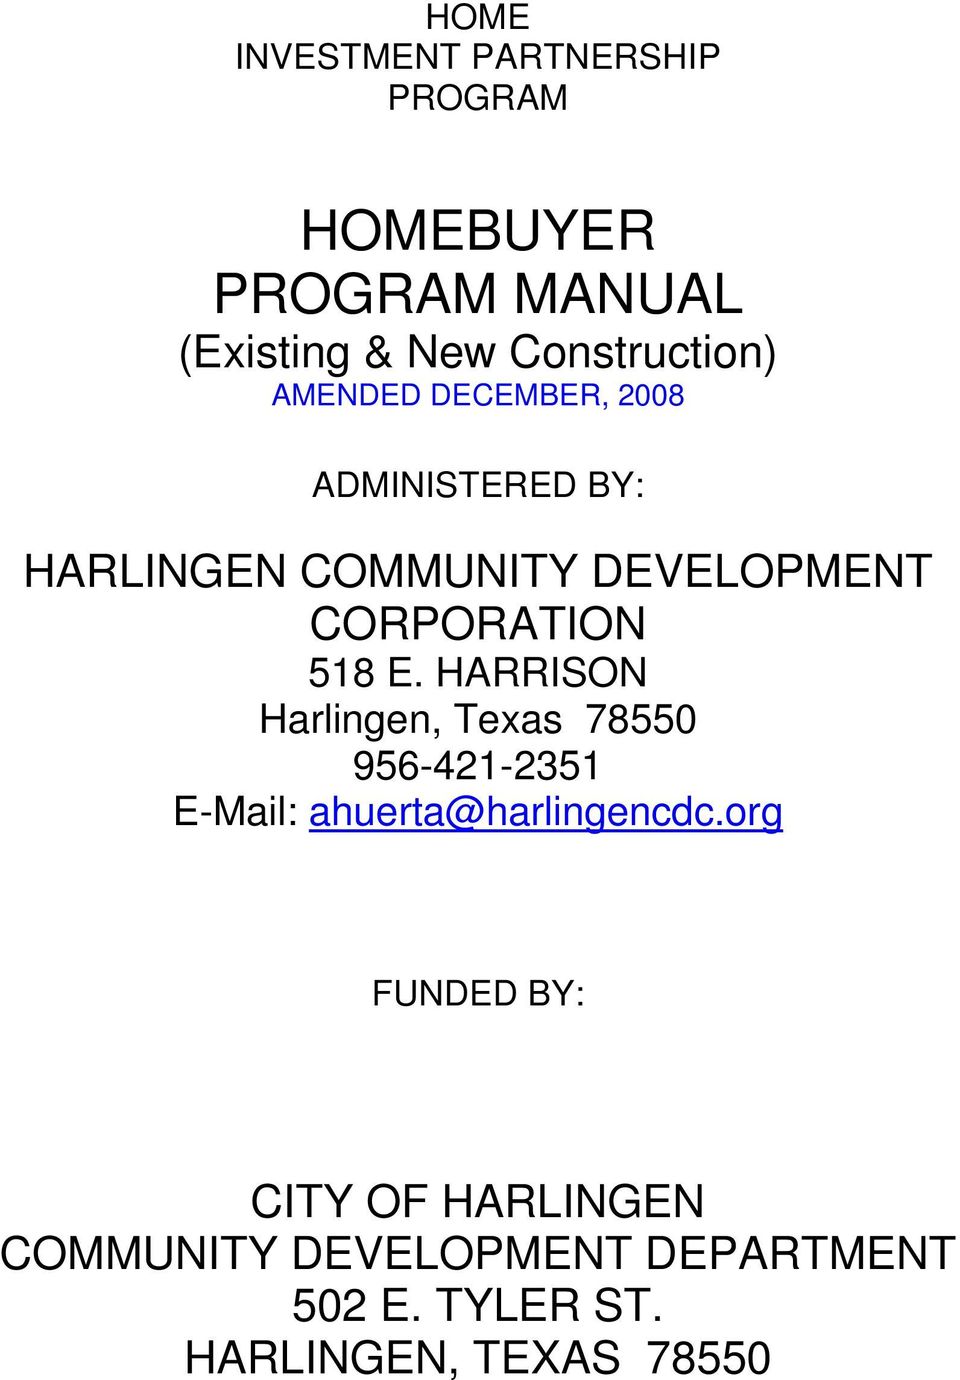 HARRISON Harlingen, Texas 78550 956-421-2351 E-Mail: ahuerta@harlingencdc.